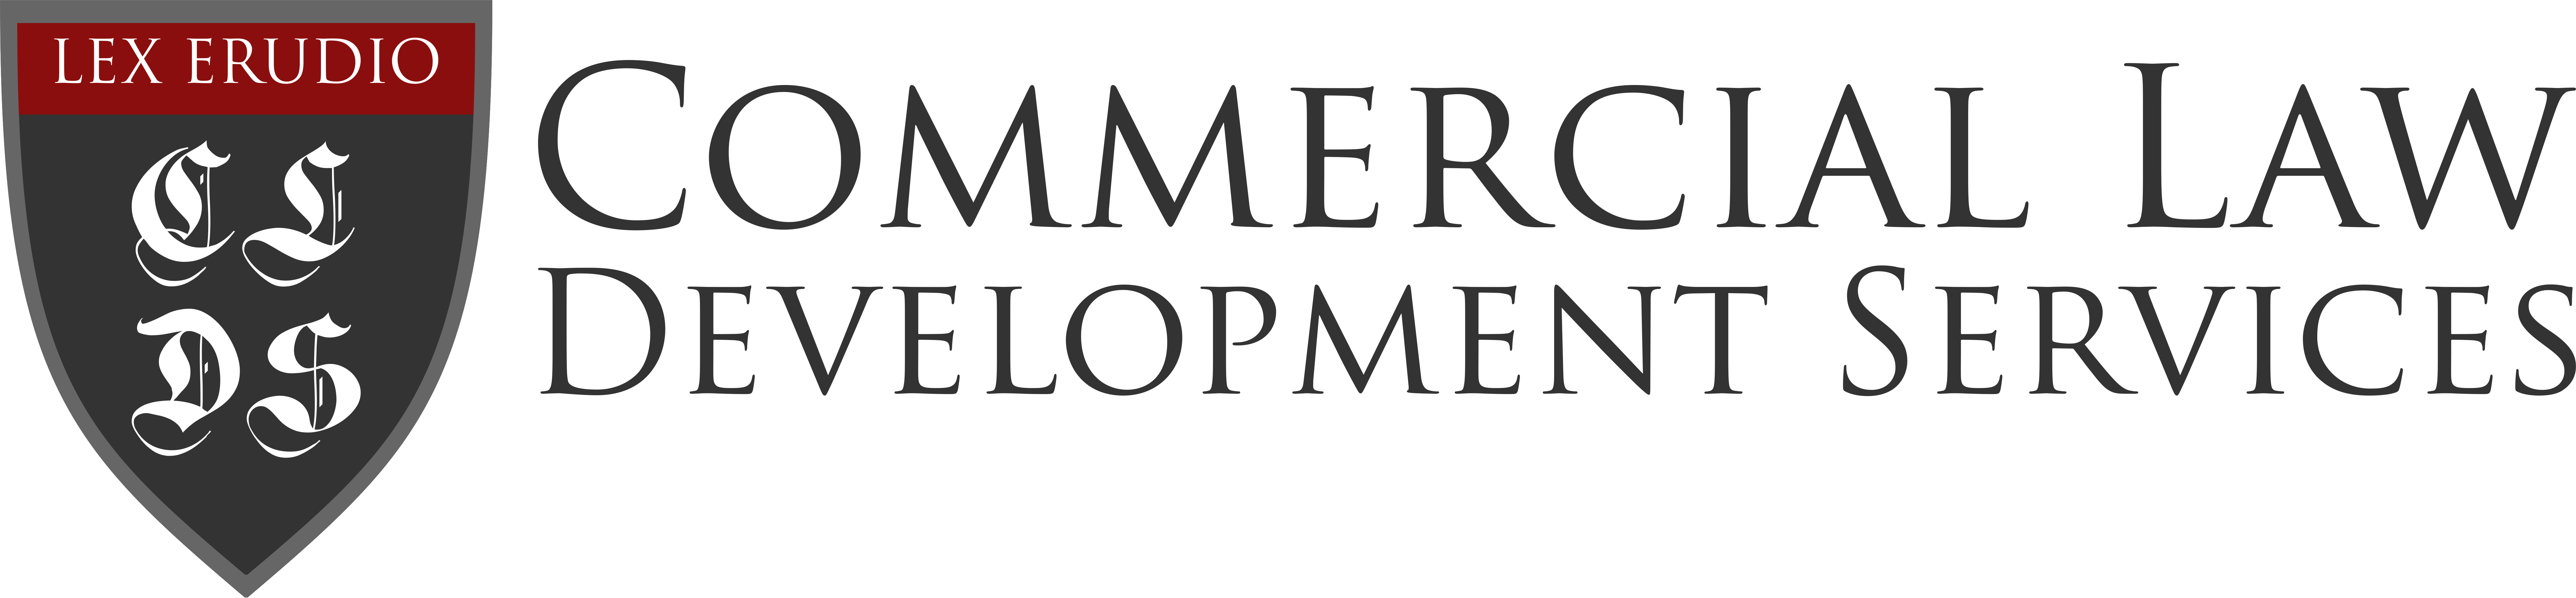 Commercial Law Development Service